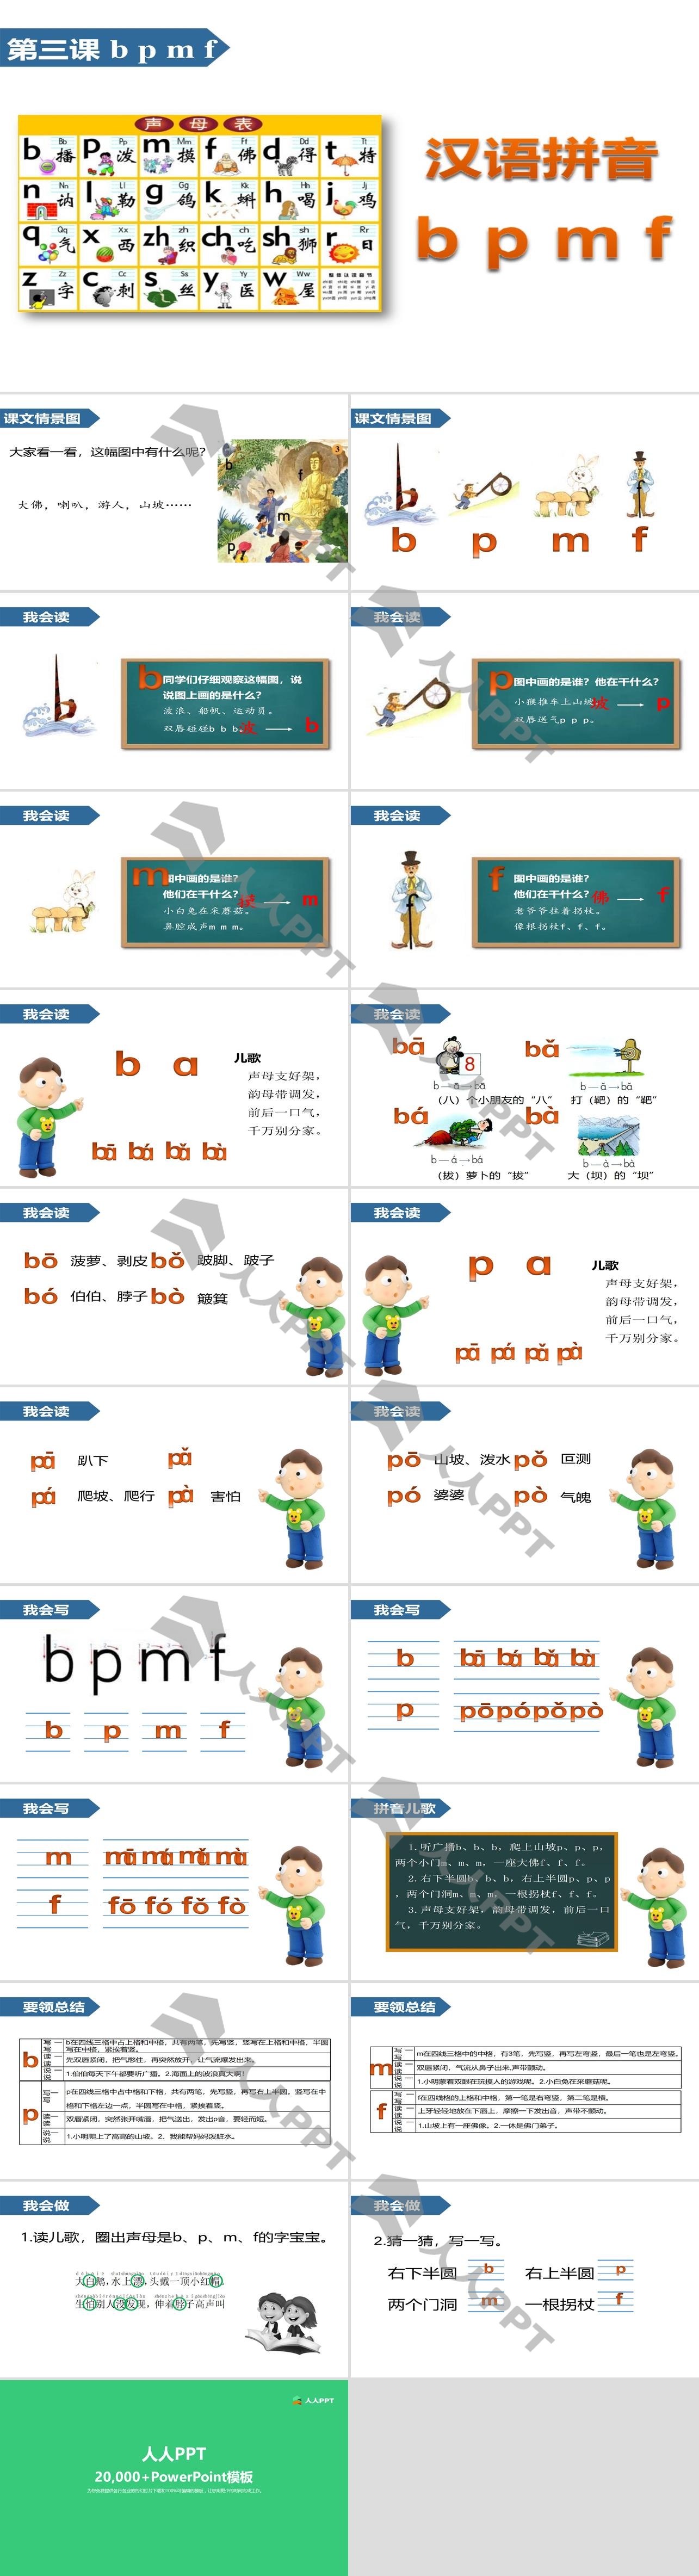 《bpmf》汉语拼音PPT长图